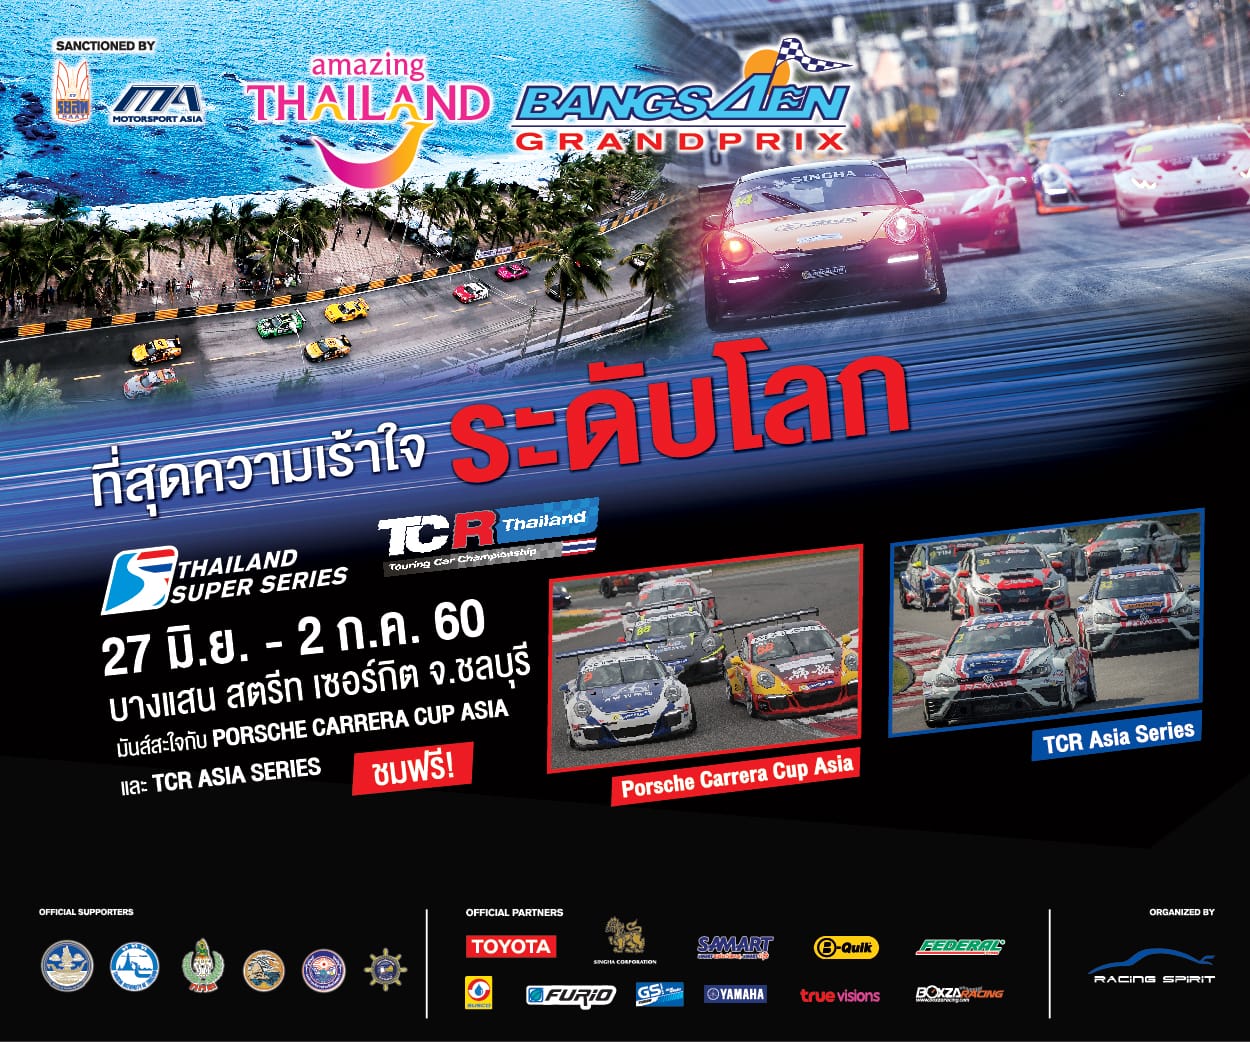 Thailand Super Series 2017